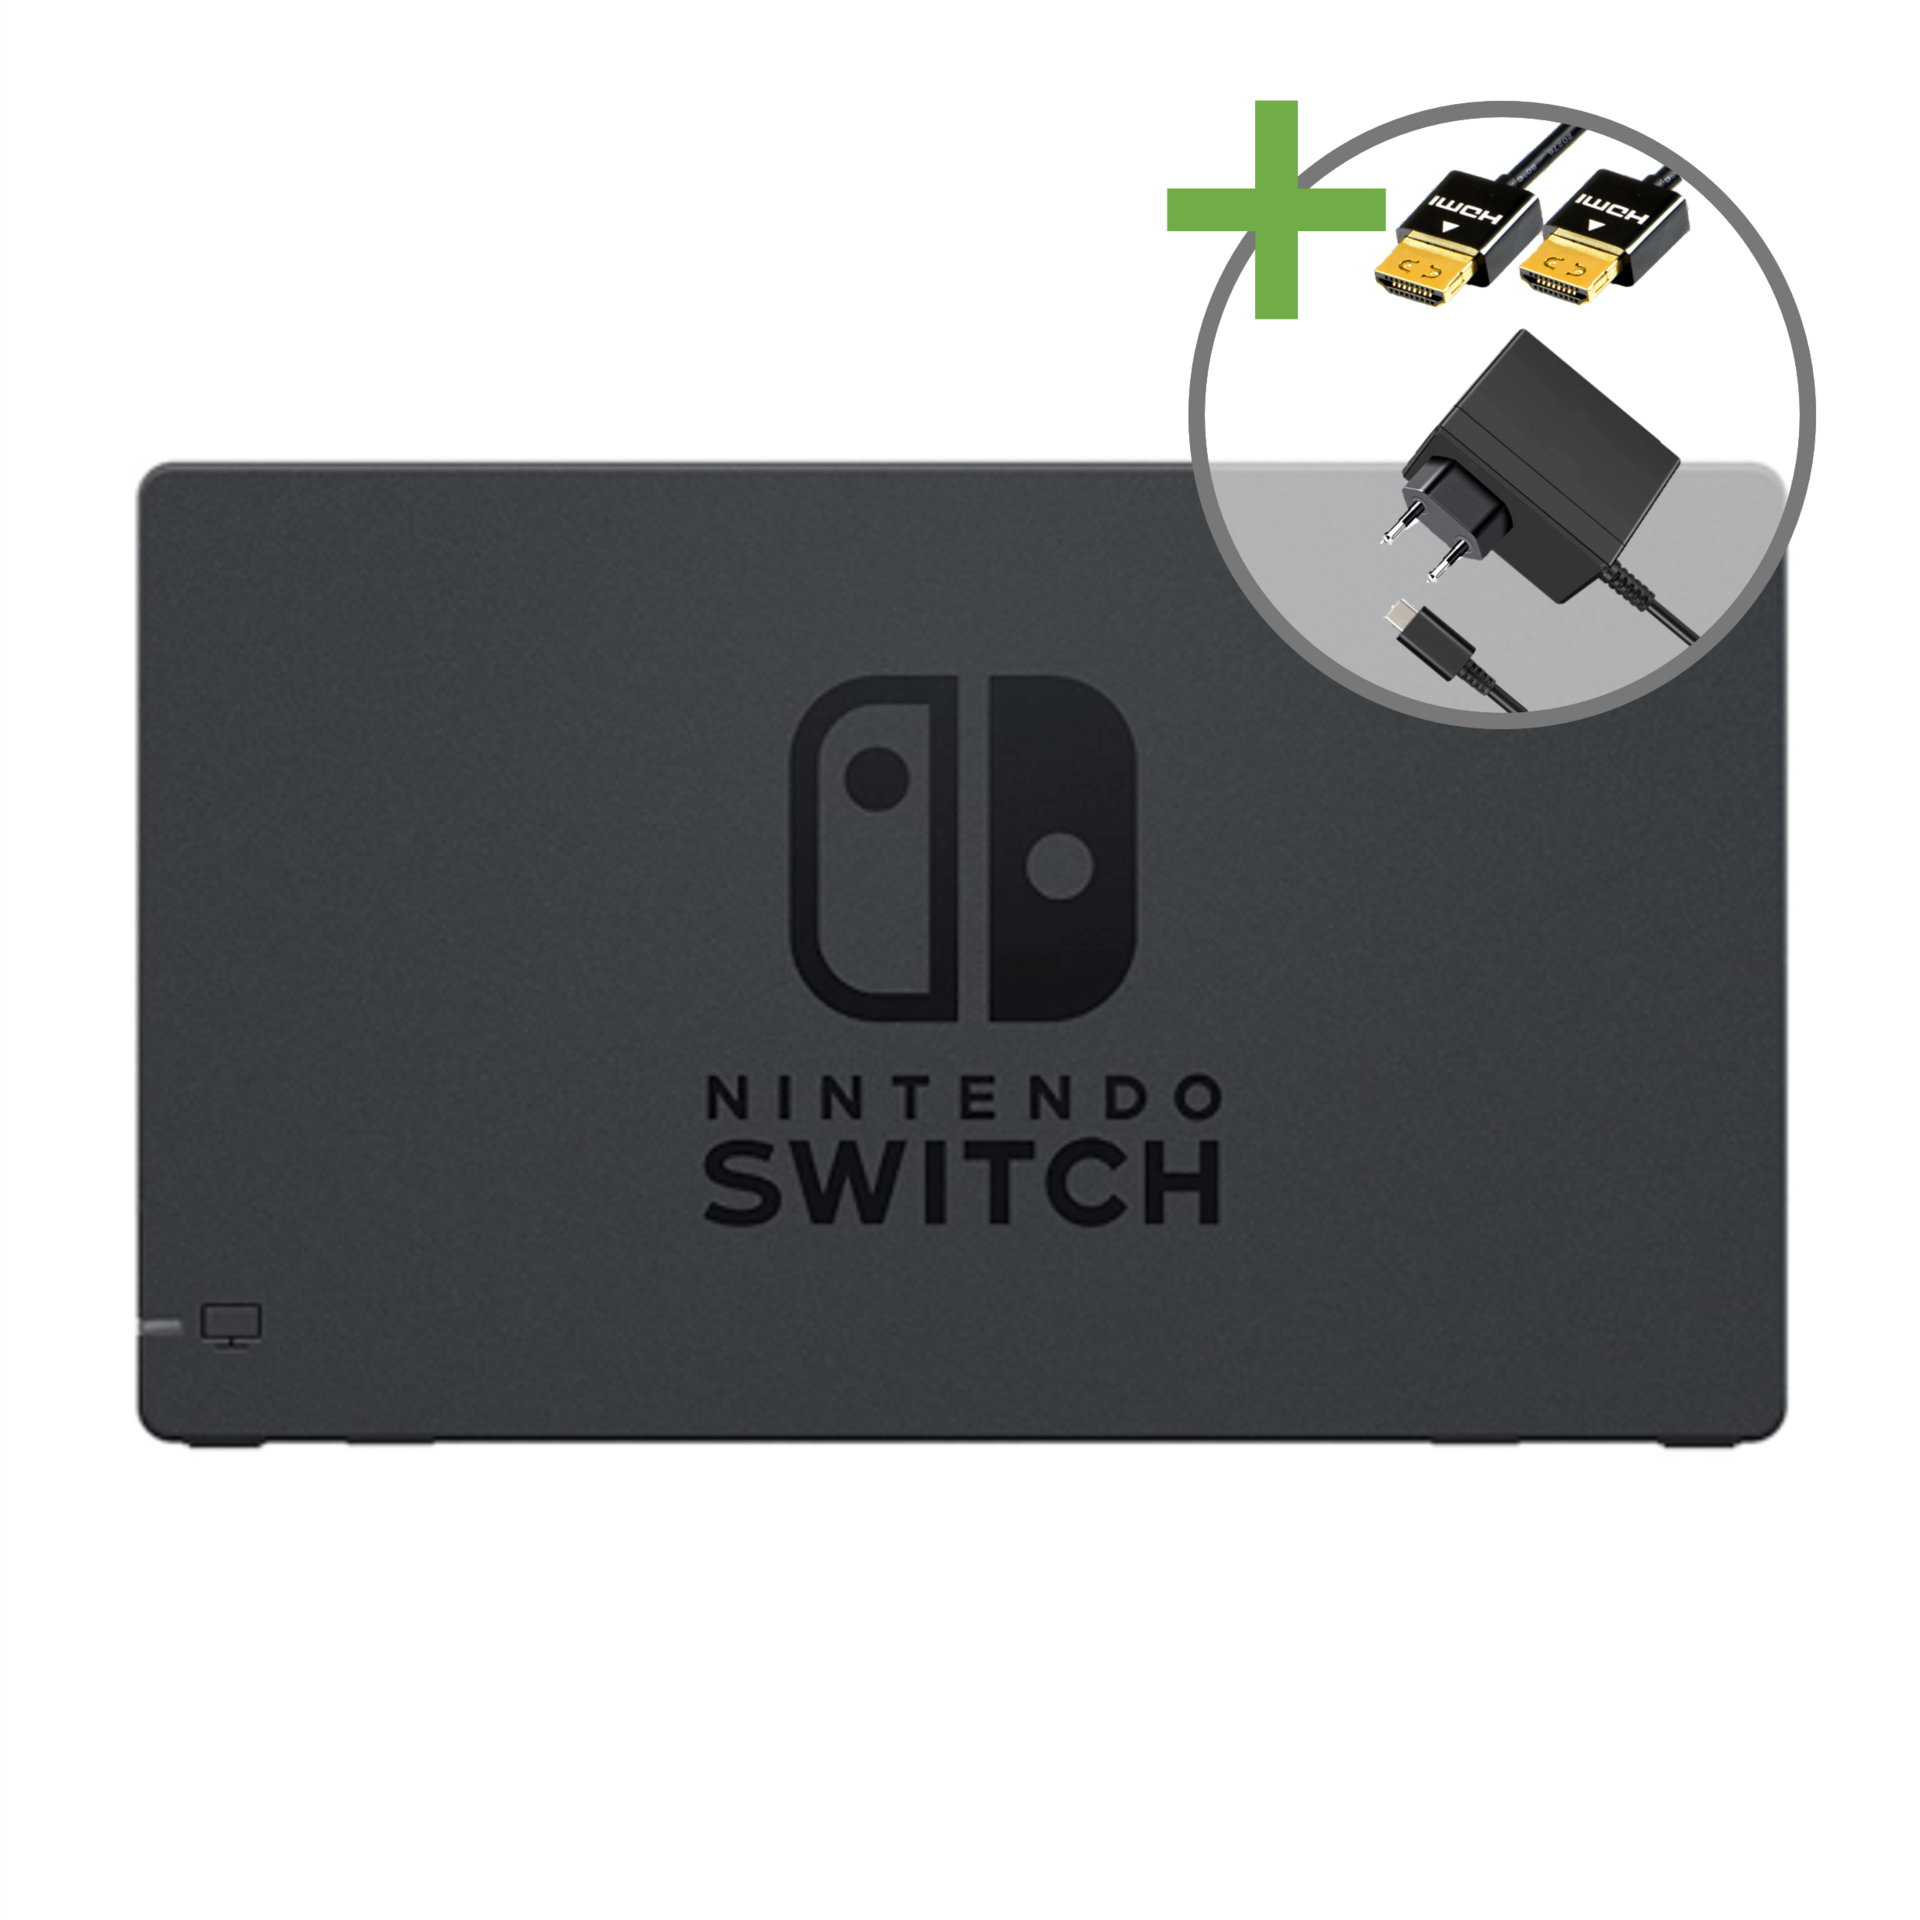 Nintendo Switch Dock [Complete] - Nintendo Switch Hardware - 2